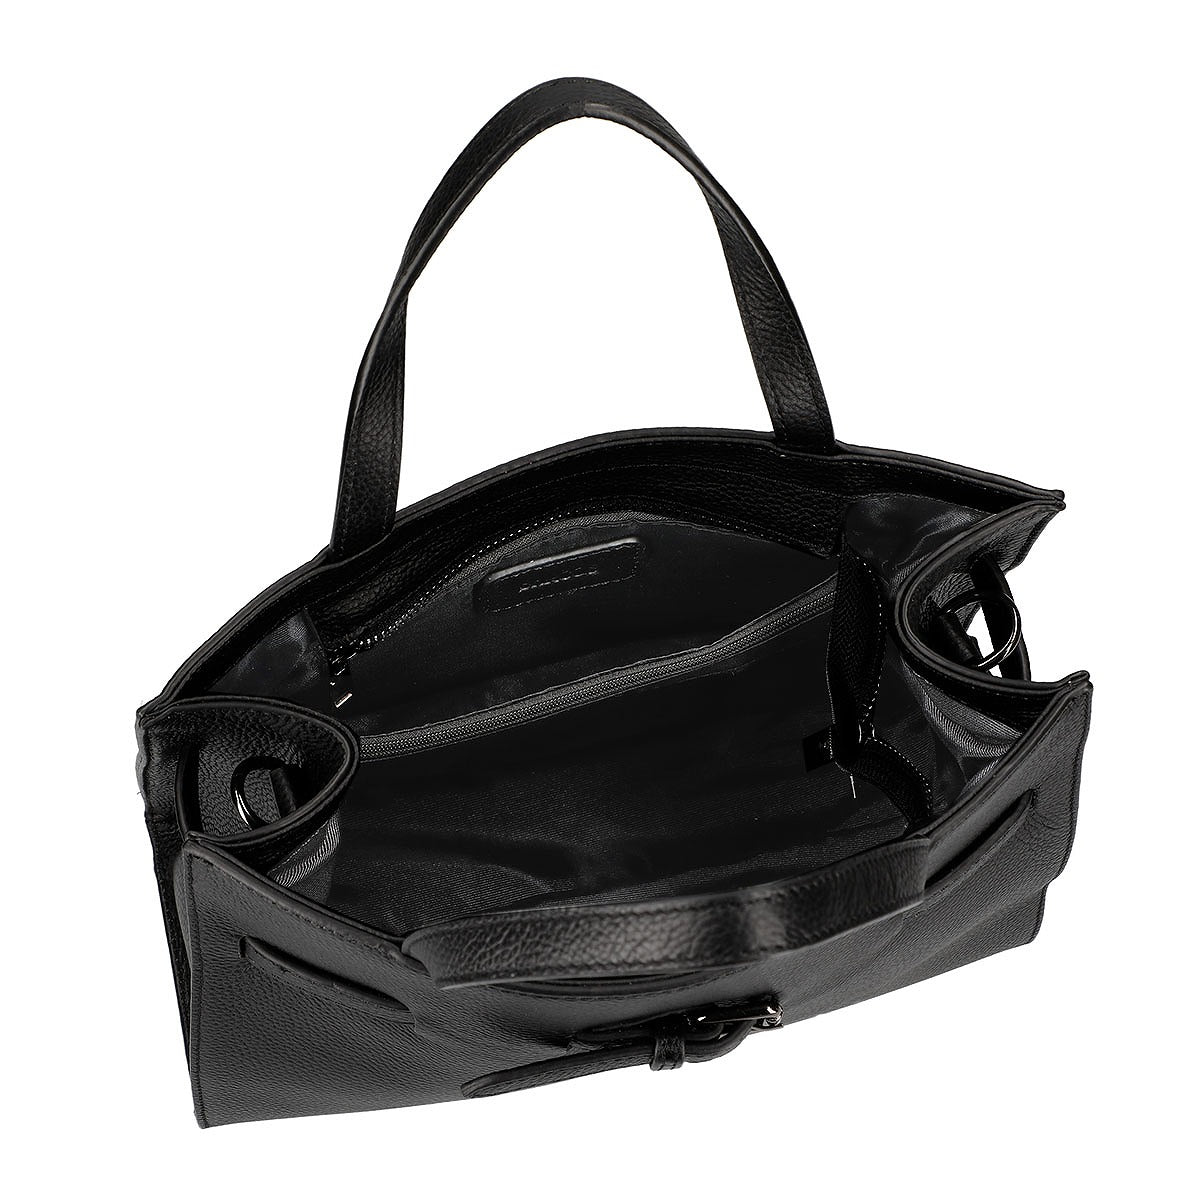 2 Way Leather Handbag with Outer Belt Design